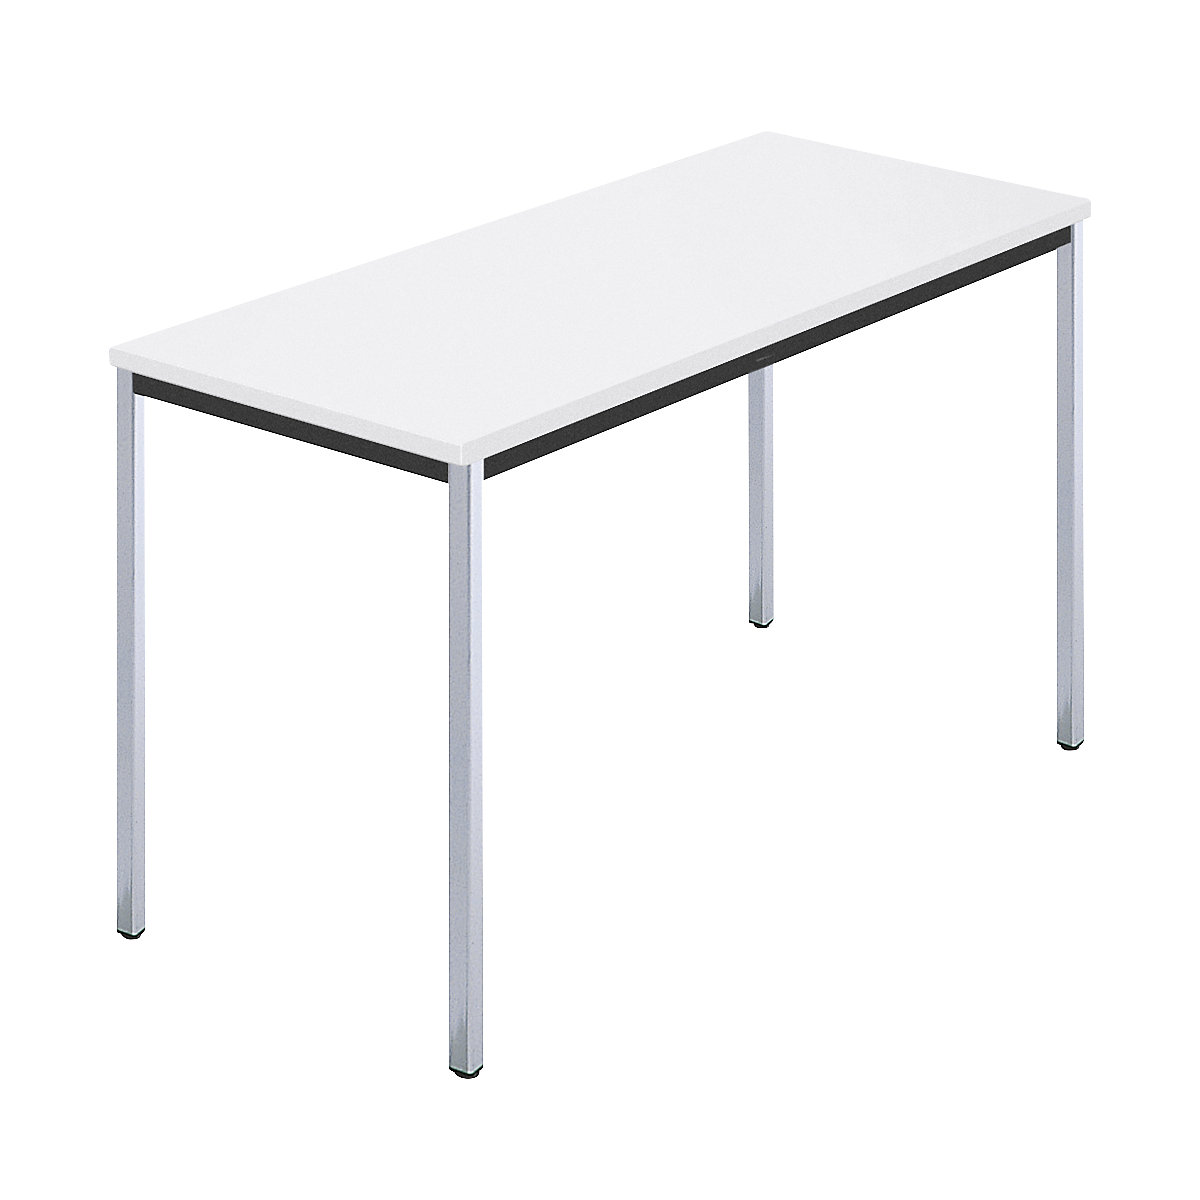 Rectangular table, square tubular steel chrome plated, WxD 1200 x 600 mm, white-6